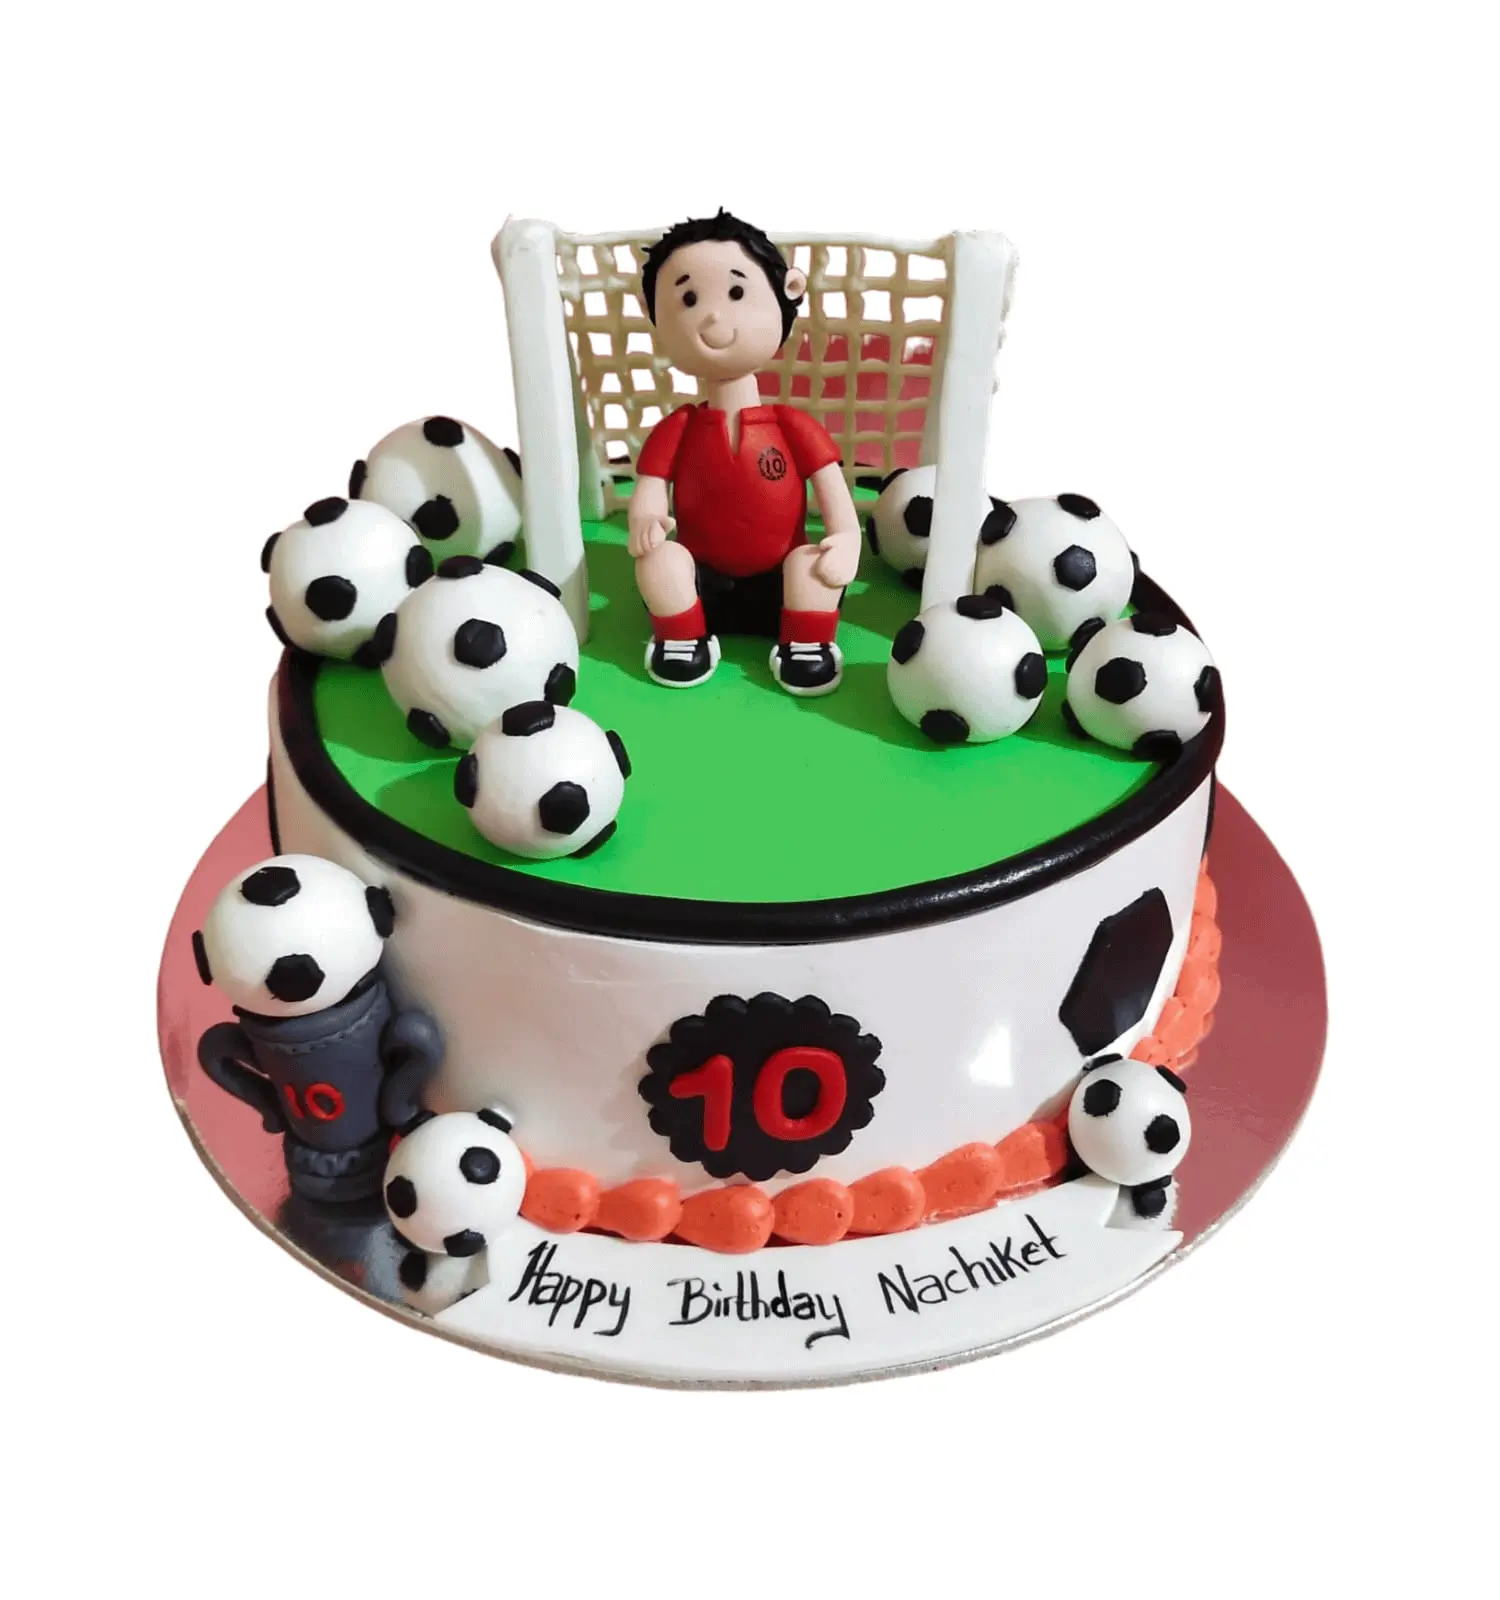 Foot ball themed cake #footballcake #football #cake #birthdaycake  #cakesofinstagram #cakedecorating #cakedesign #cakes #cakestagram #cake...  | Instagram